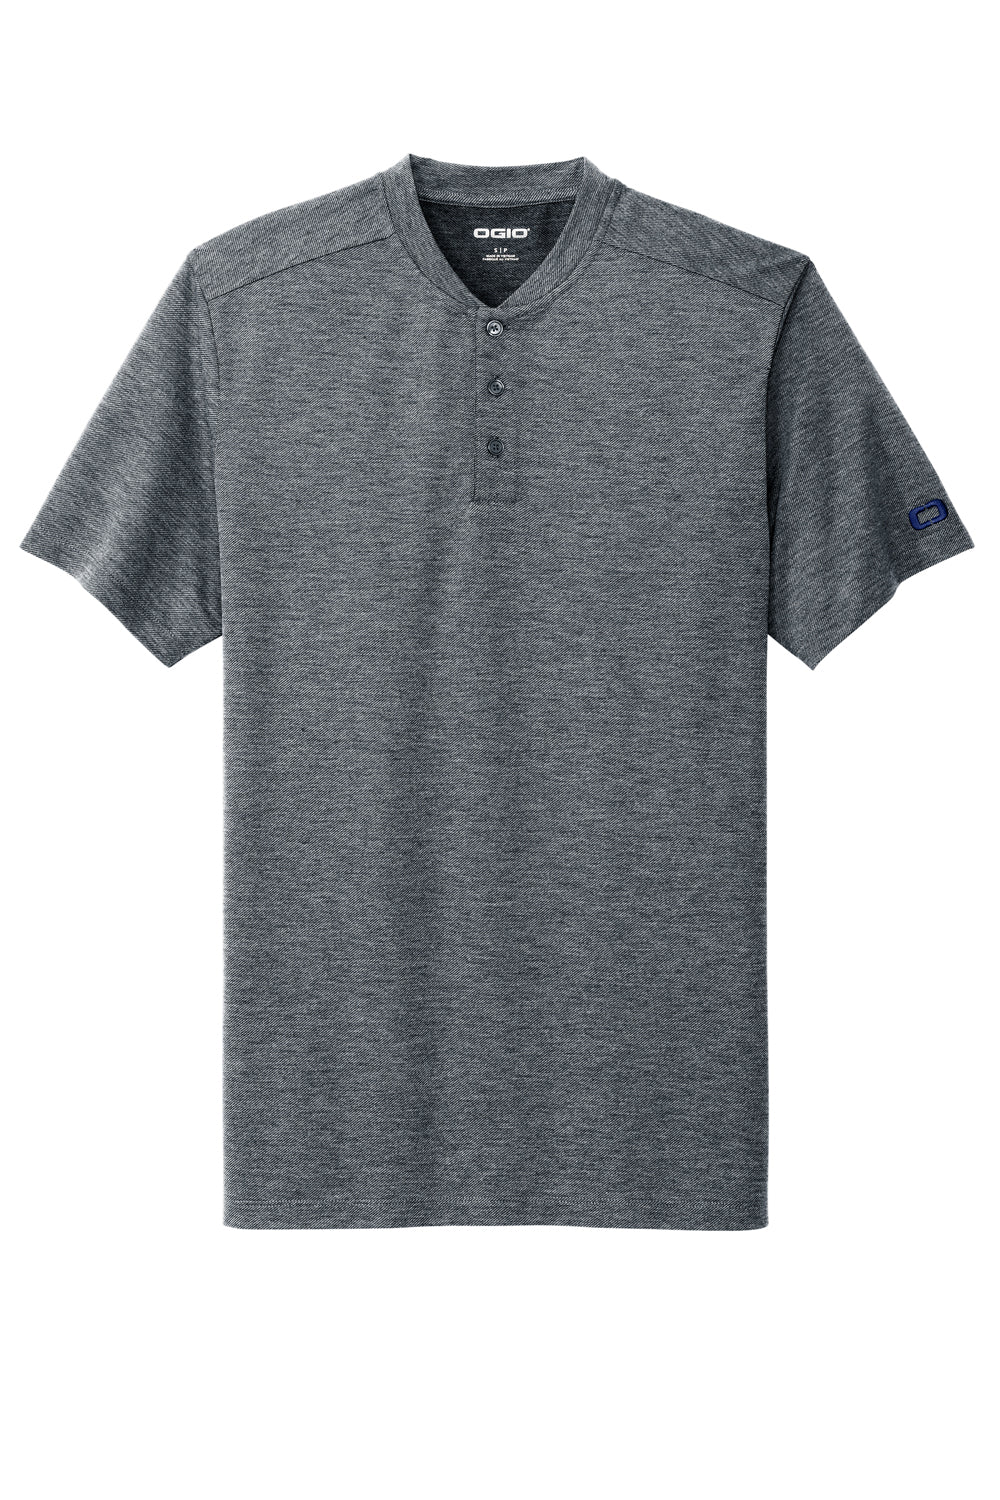 Ogio OG148 Evolution Short Sleeve Henley T-Shirt River Navy Blue Flat Front